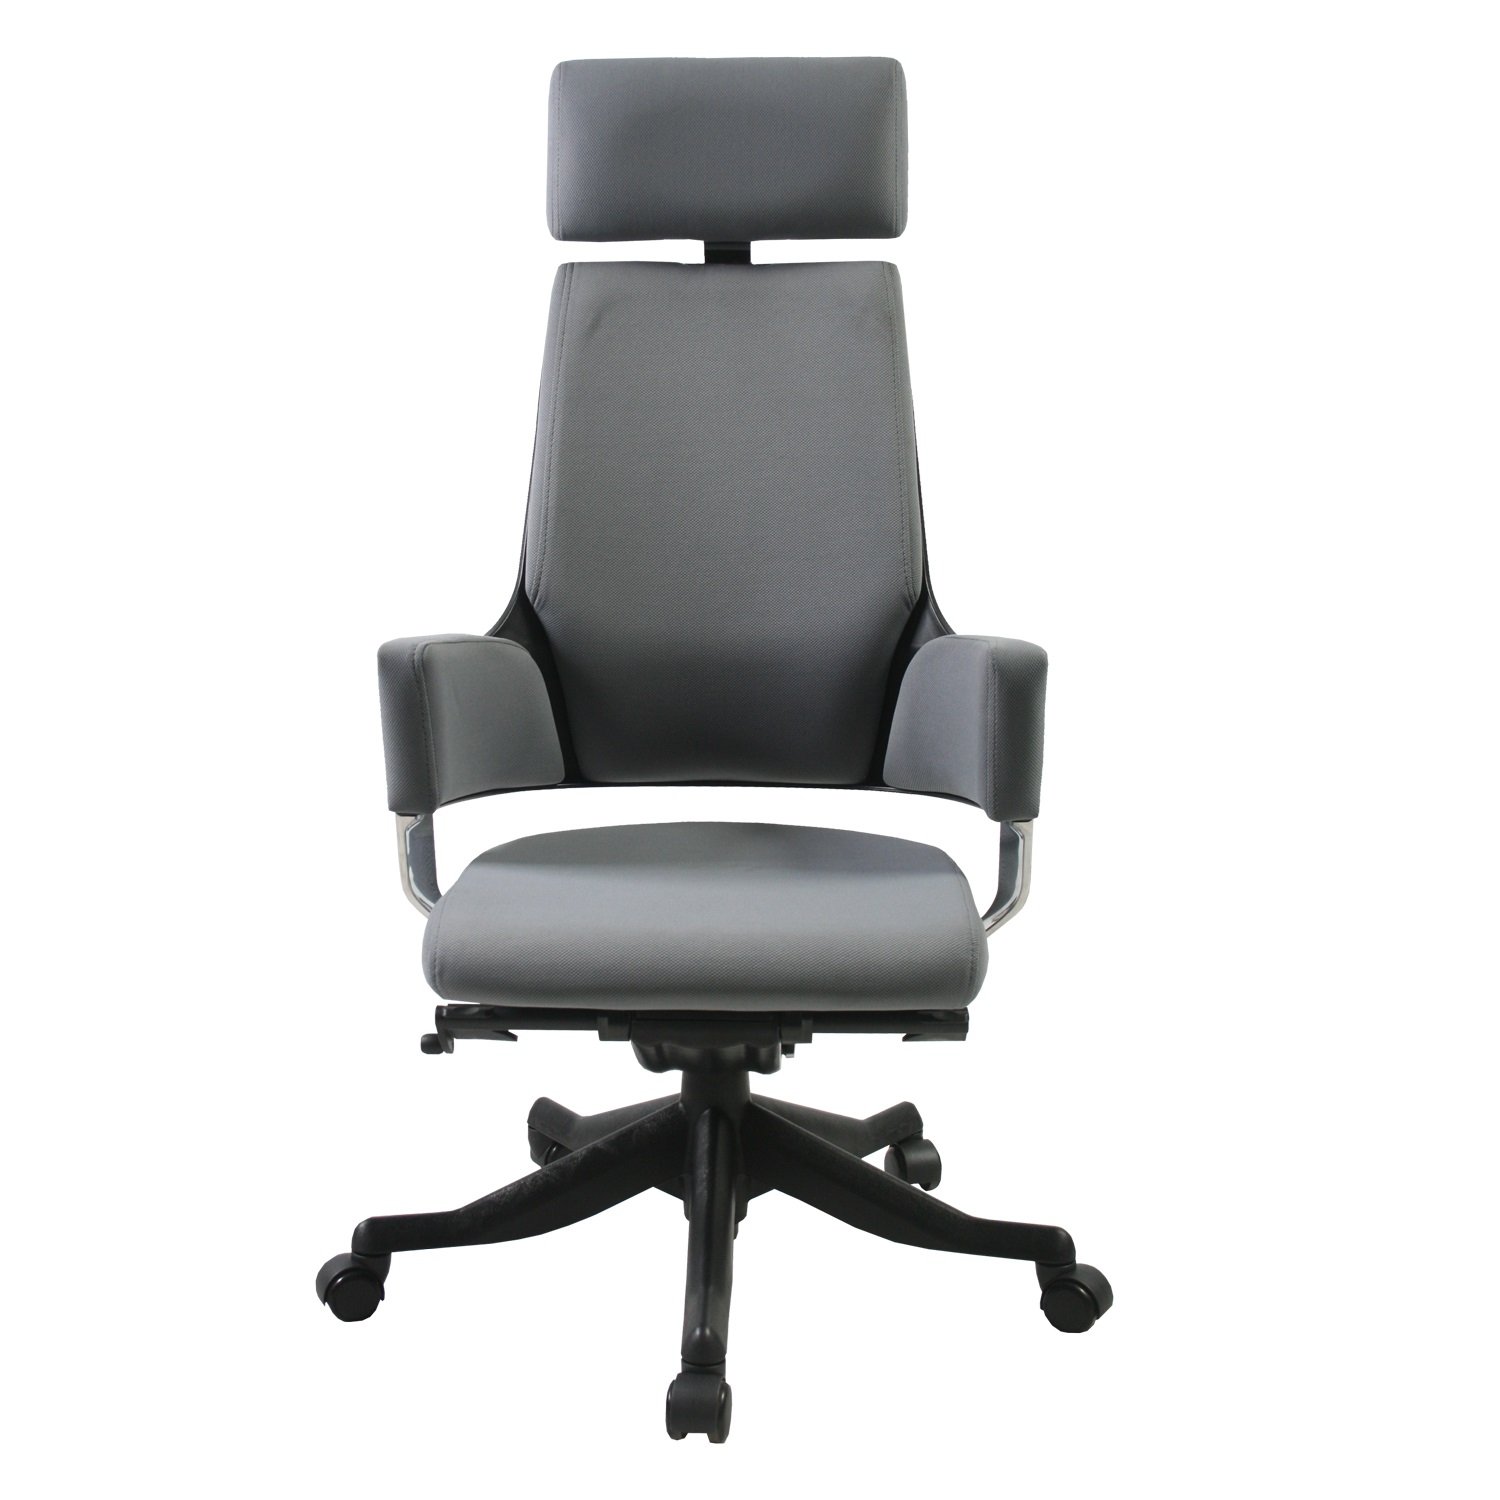 Biuro kėdė DELPHI su galvos atrama, 60x47x117,5-133,5 cm, pilka